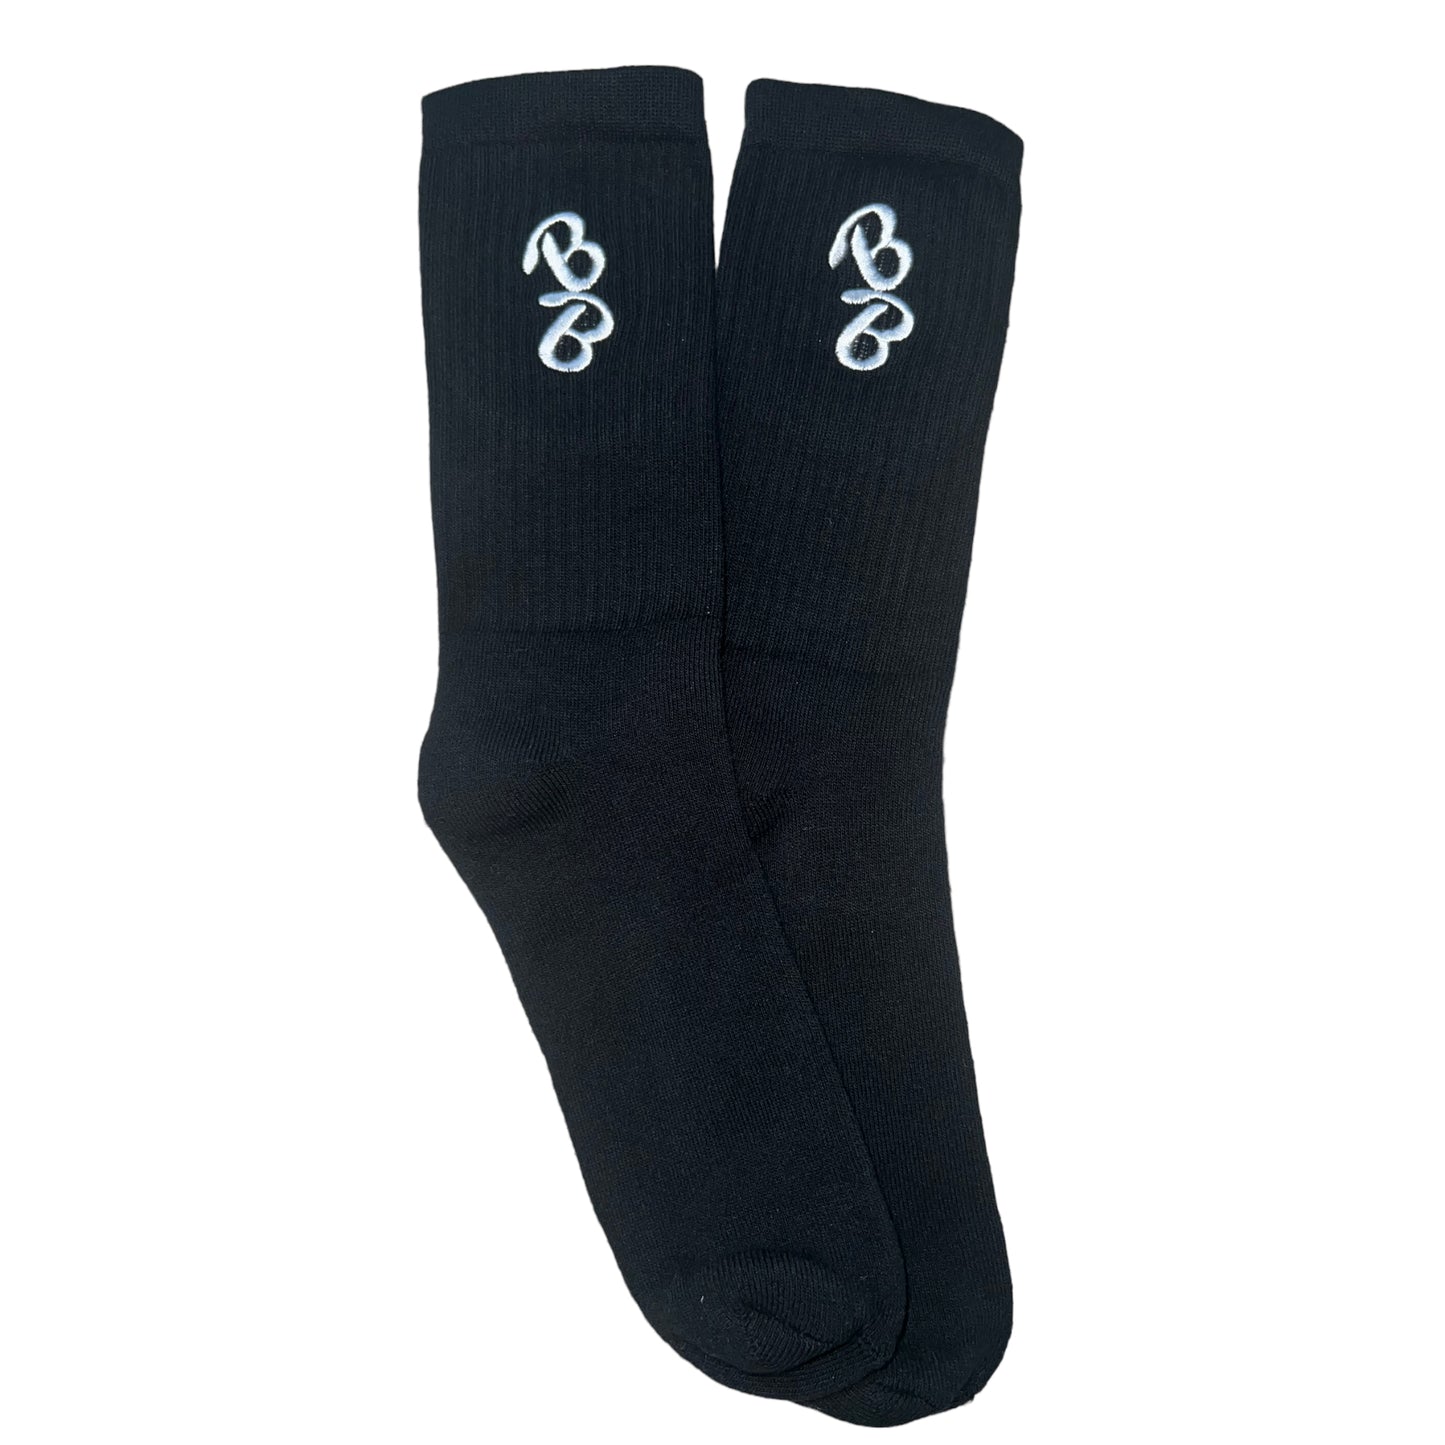 Buddy’s Original Socks